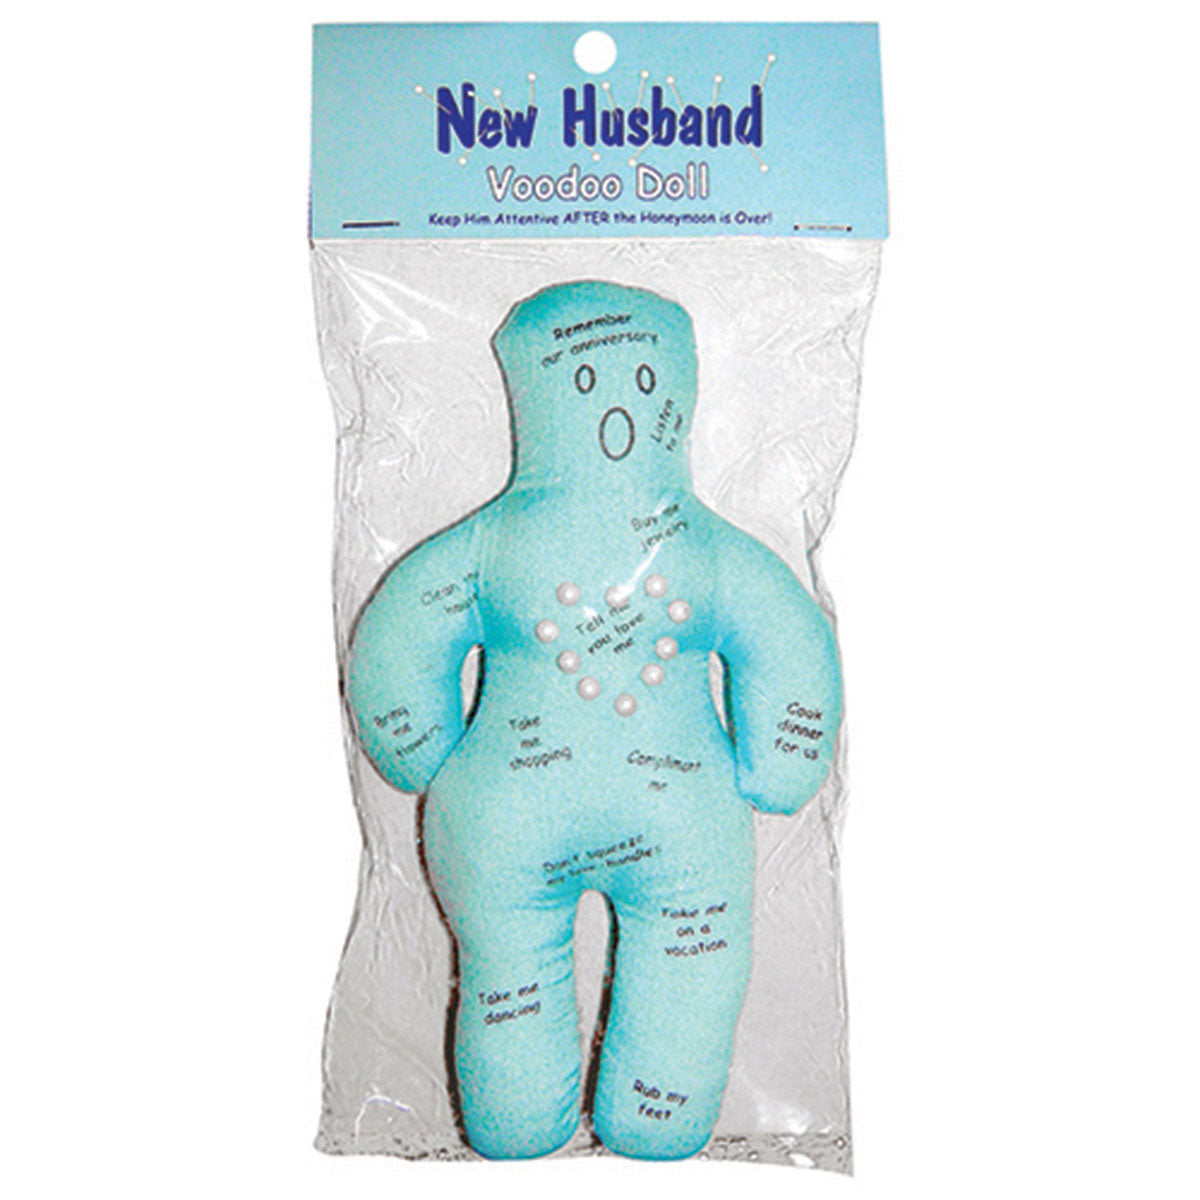 New Husband Voodoo Doll